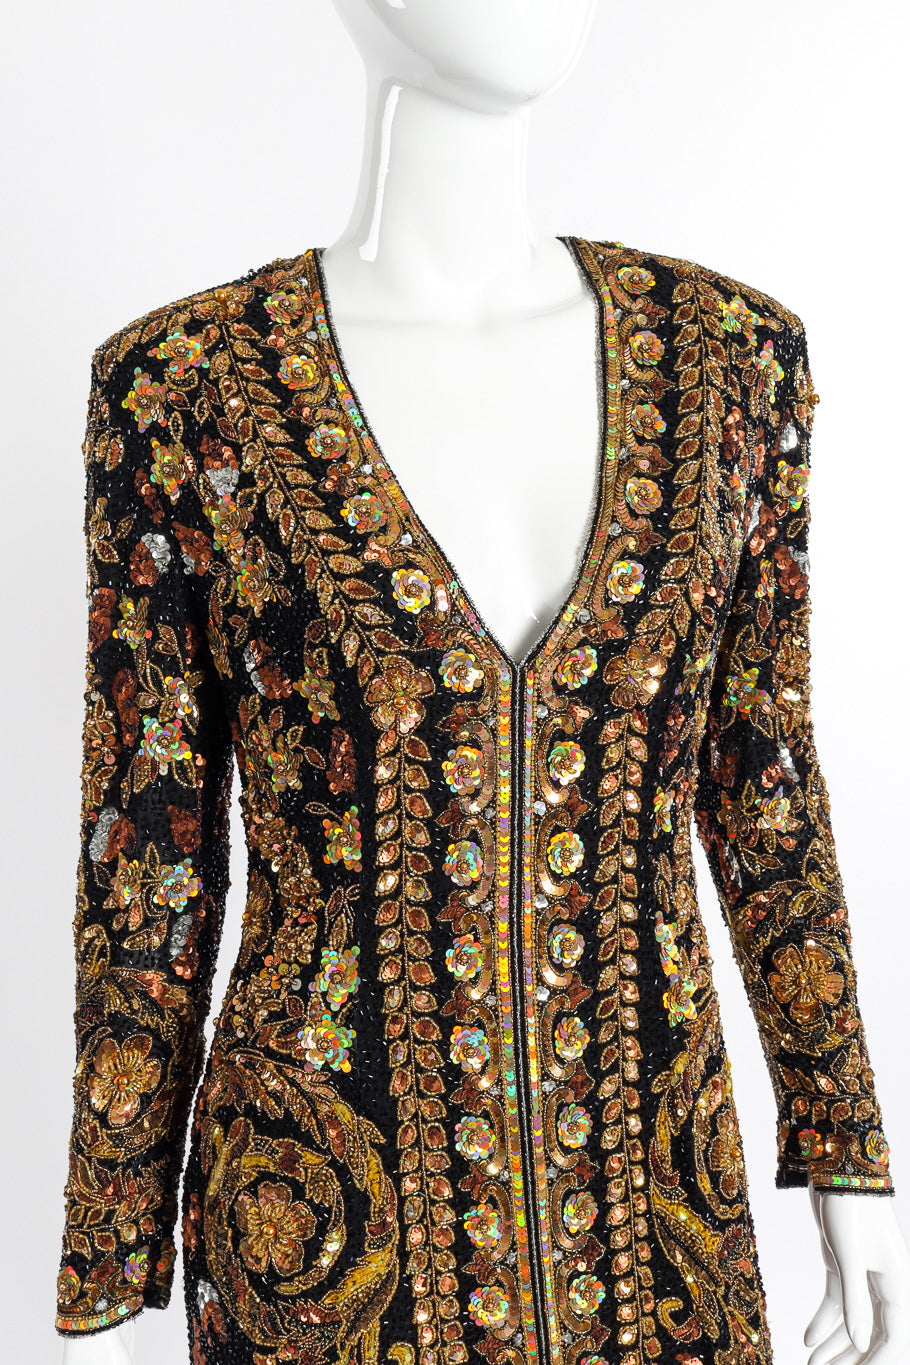 Vintage Naeem Khan Beaded Floral Brocade Gown front on mannequin closeup @recessla